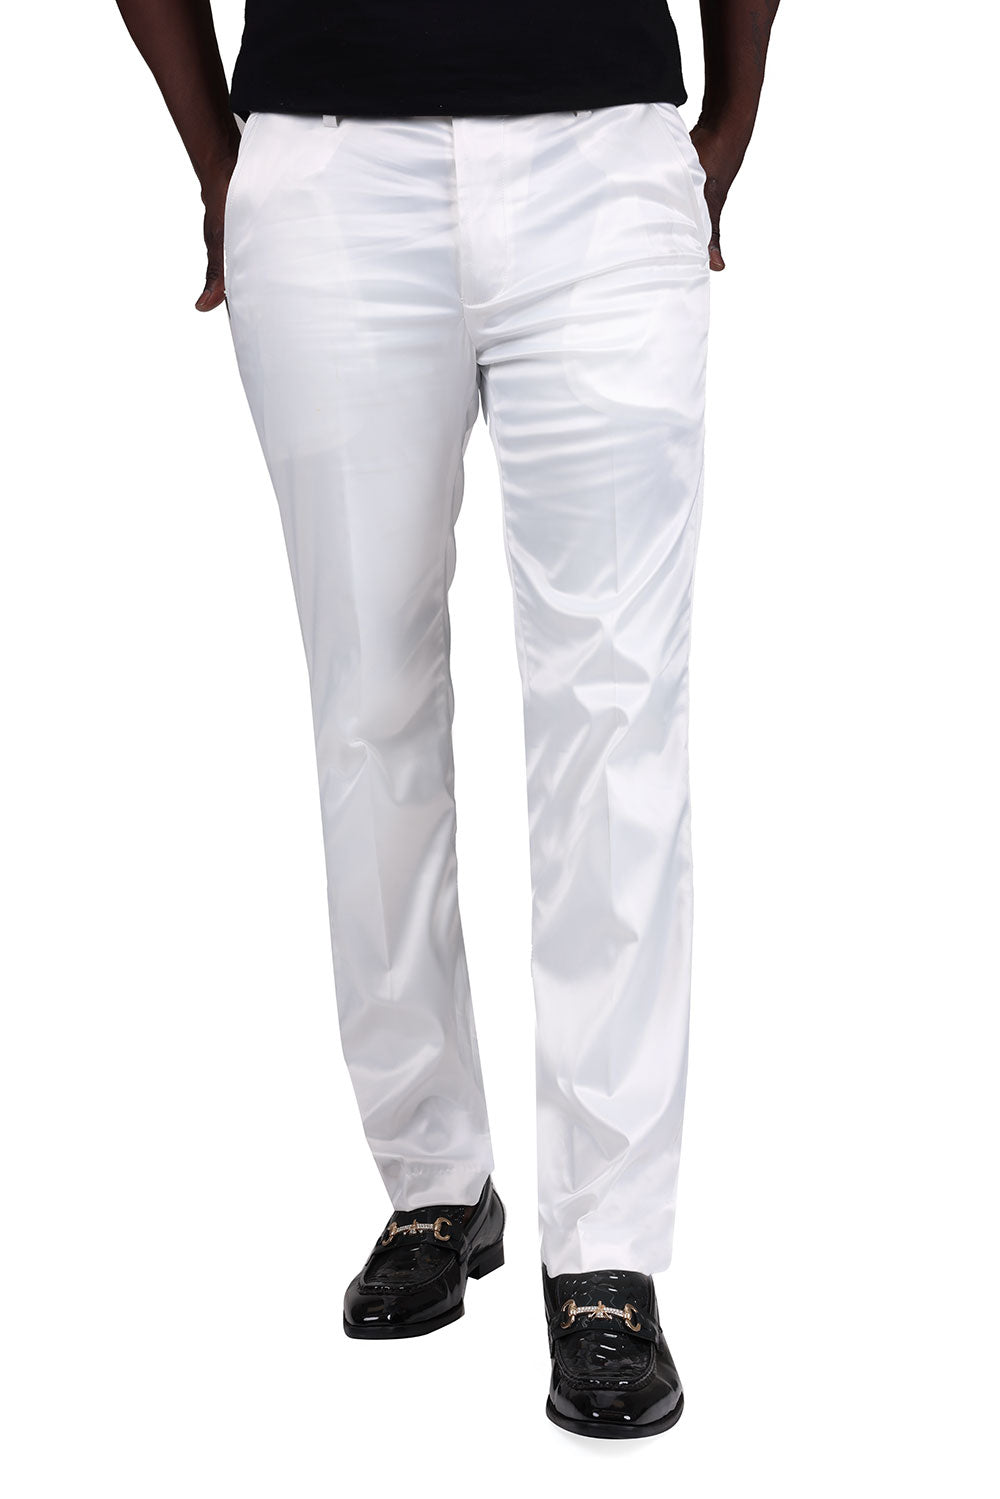 BARABAS Men's Solid Color Shiny Chino Pants VP1010 White